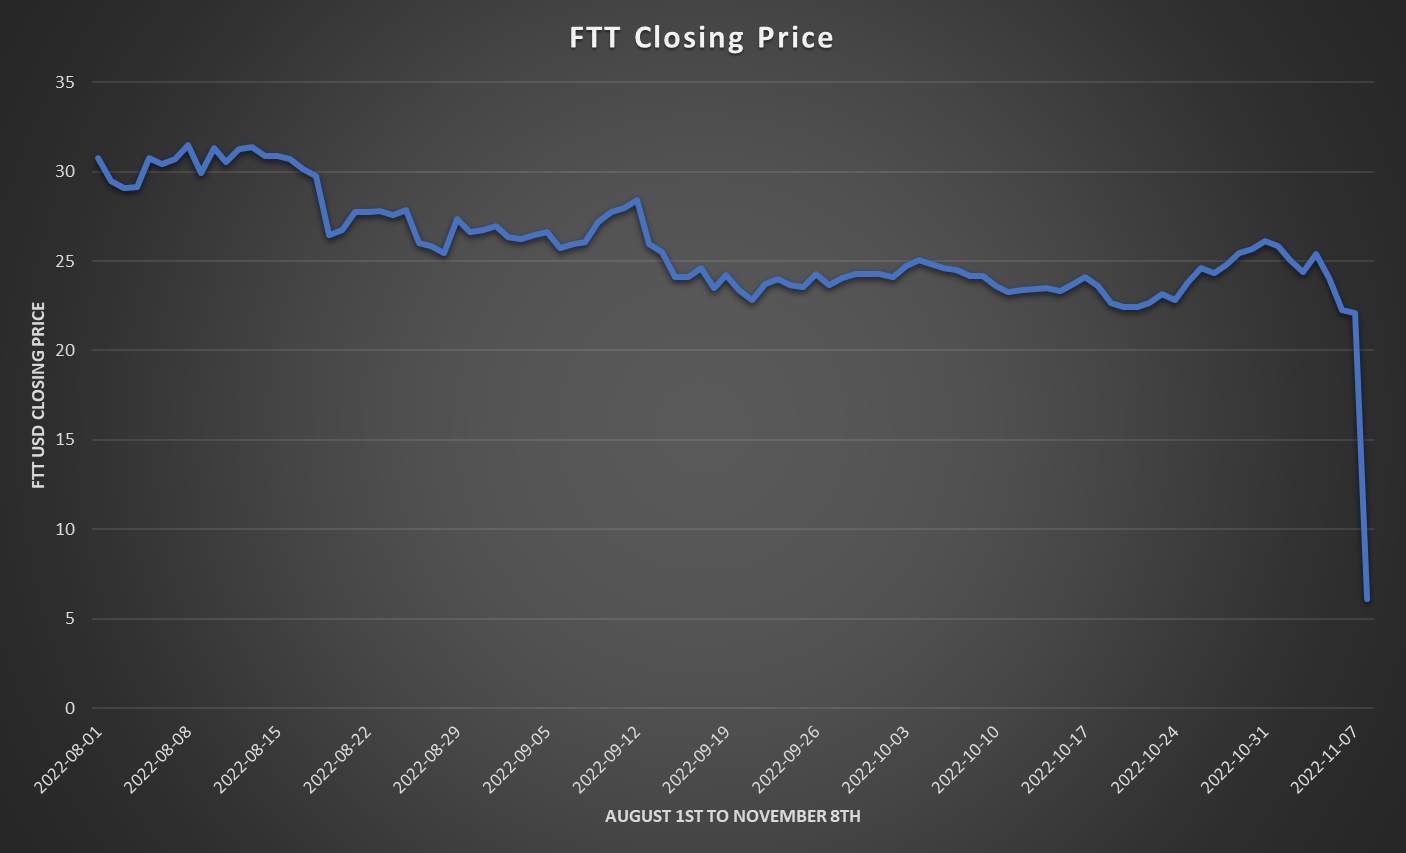 FTT closing price